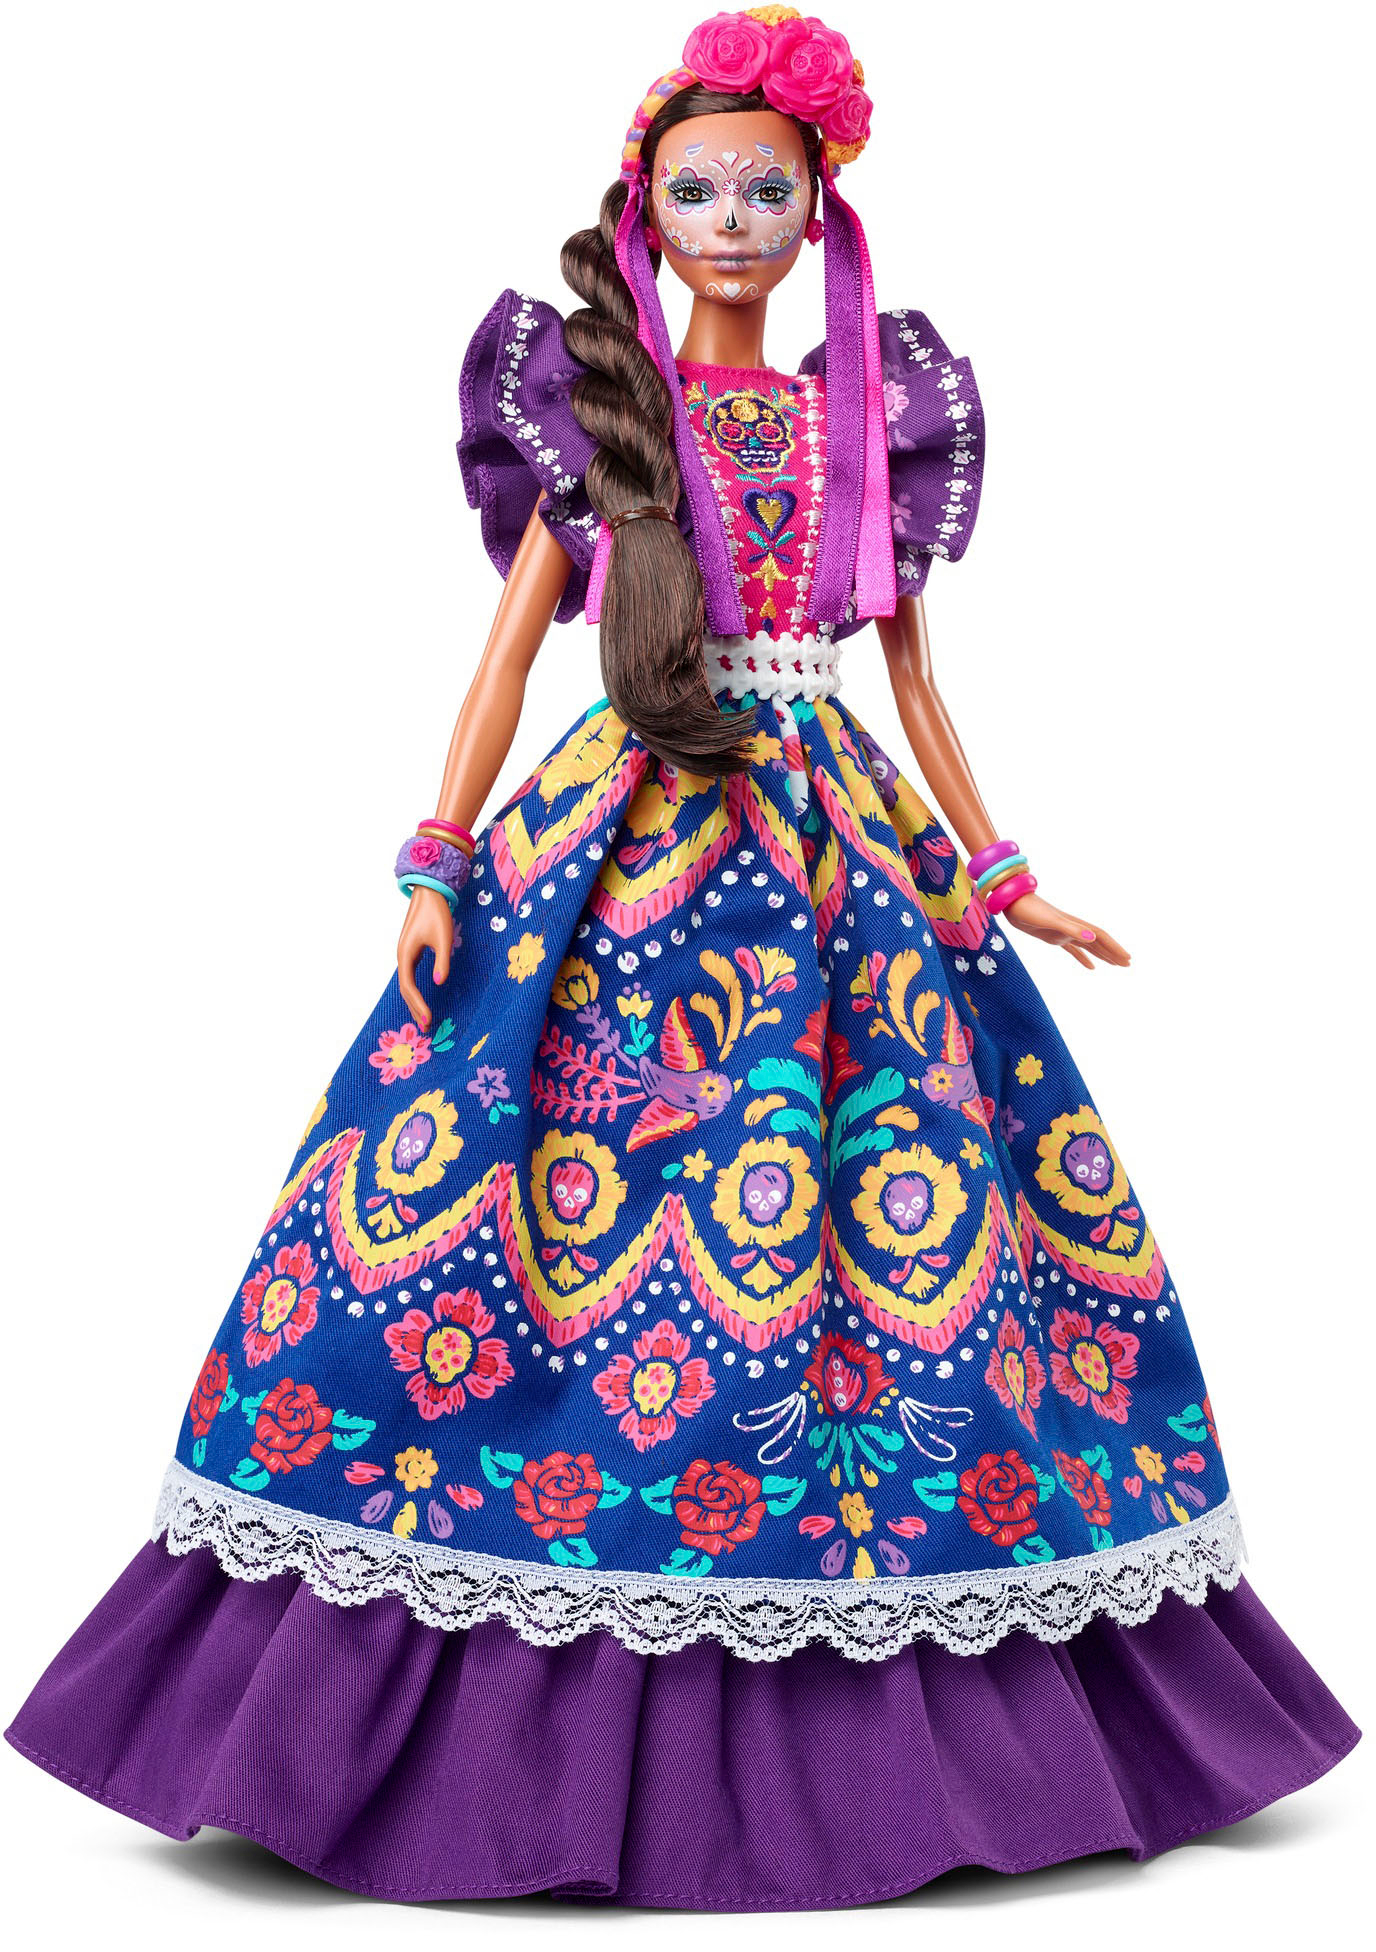 Barbie Signature Looks 11.5 Red Hair Doll HBX94 - Best Buy